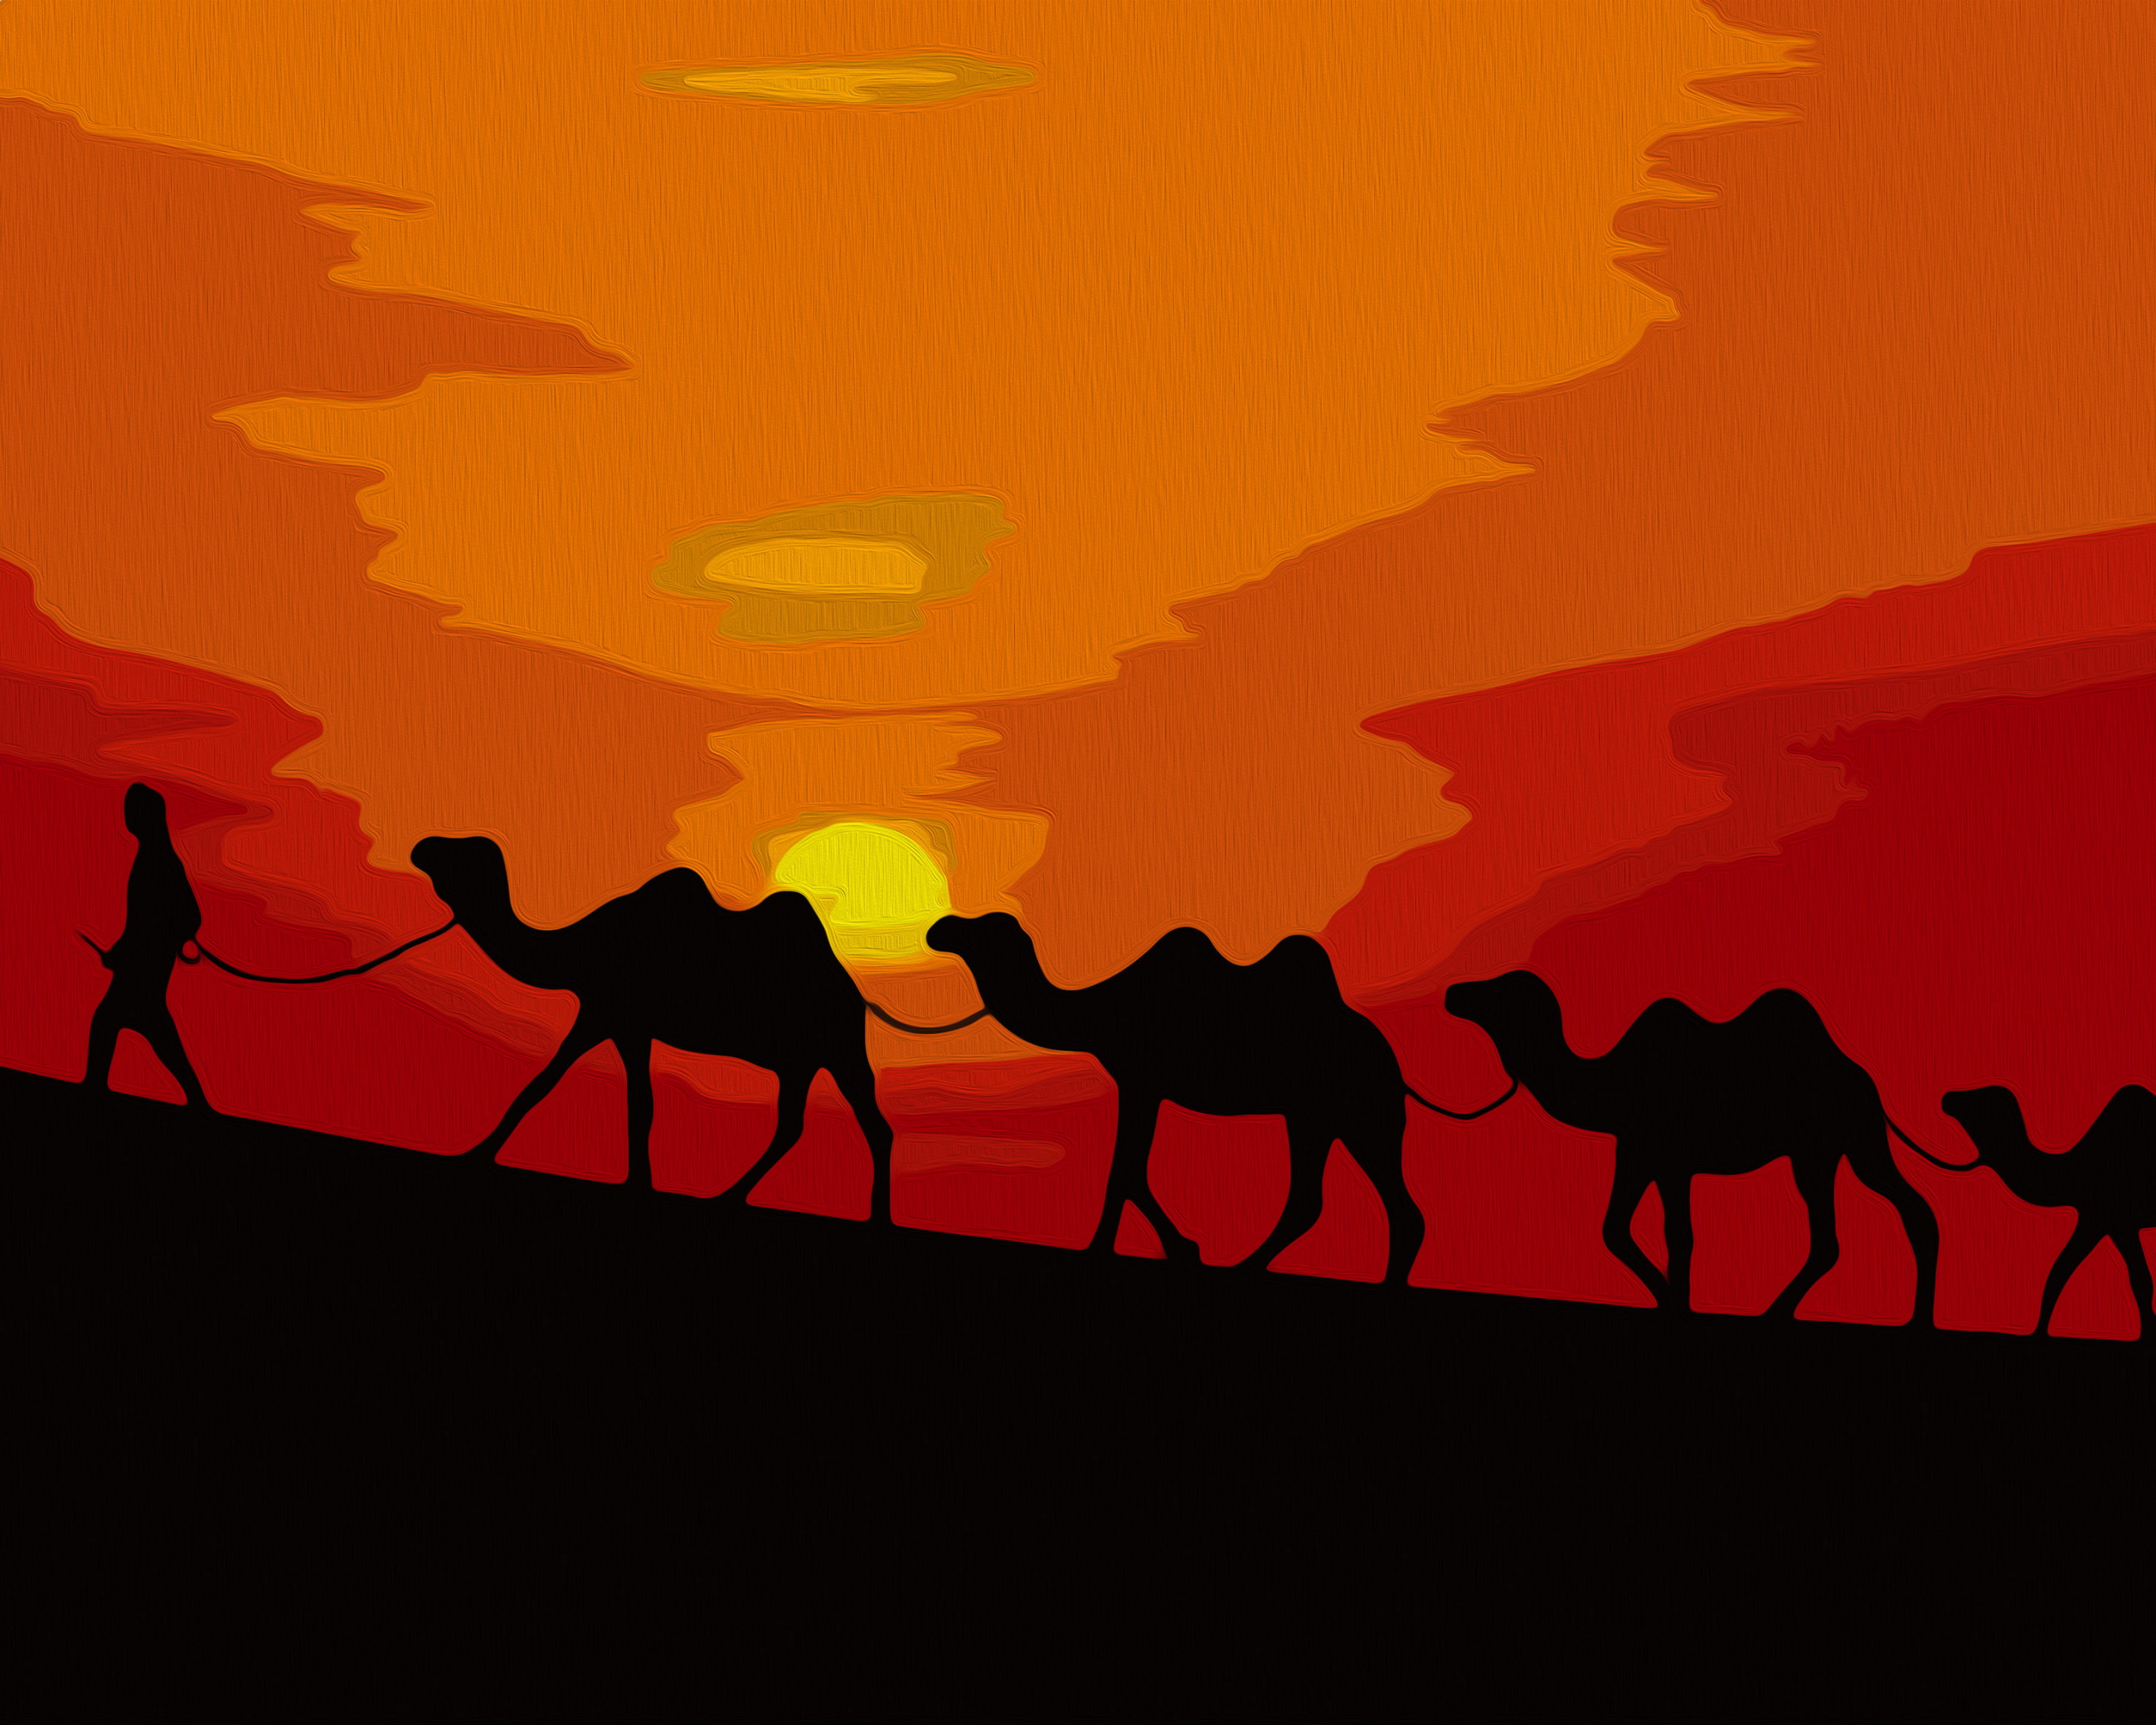 Там караван. Верблюды Караван. Караван верблюдов на закате. Караван верблюдов в пустыне. Верблюды в пустыне на закате.